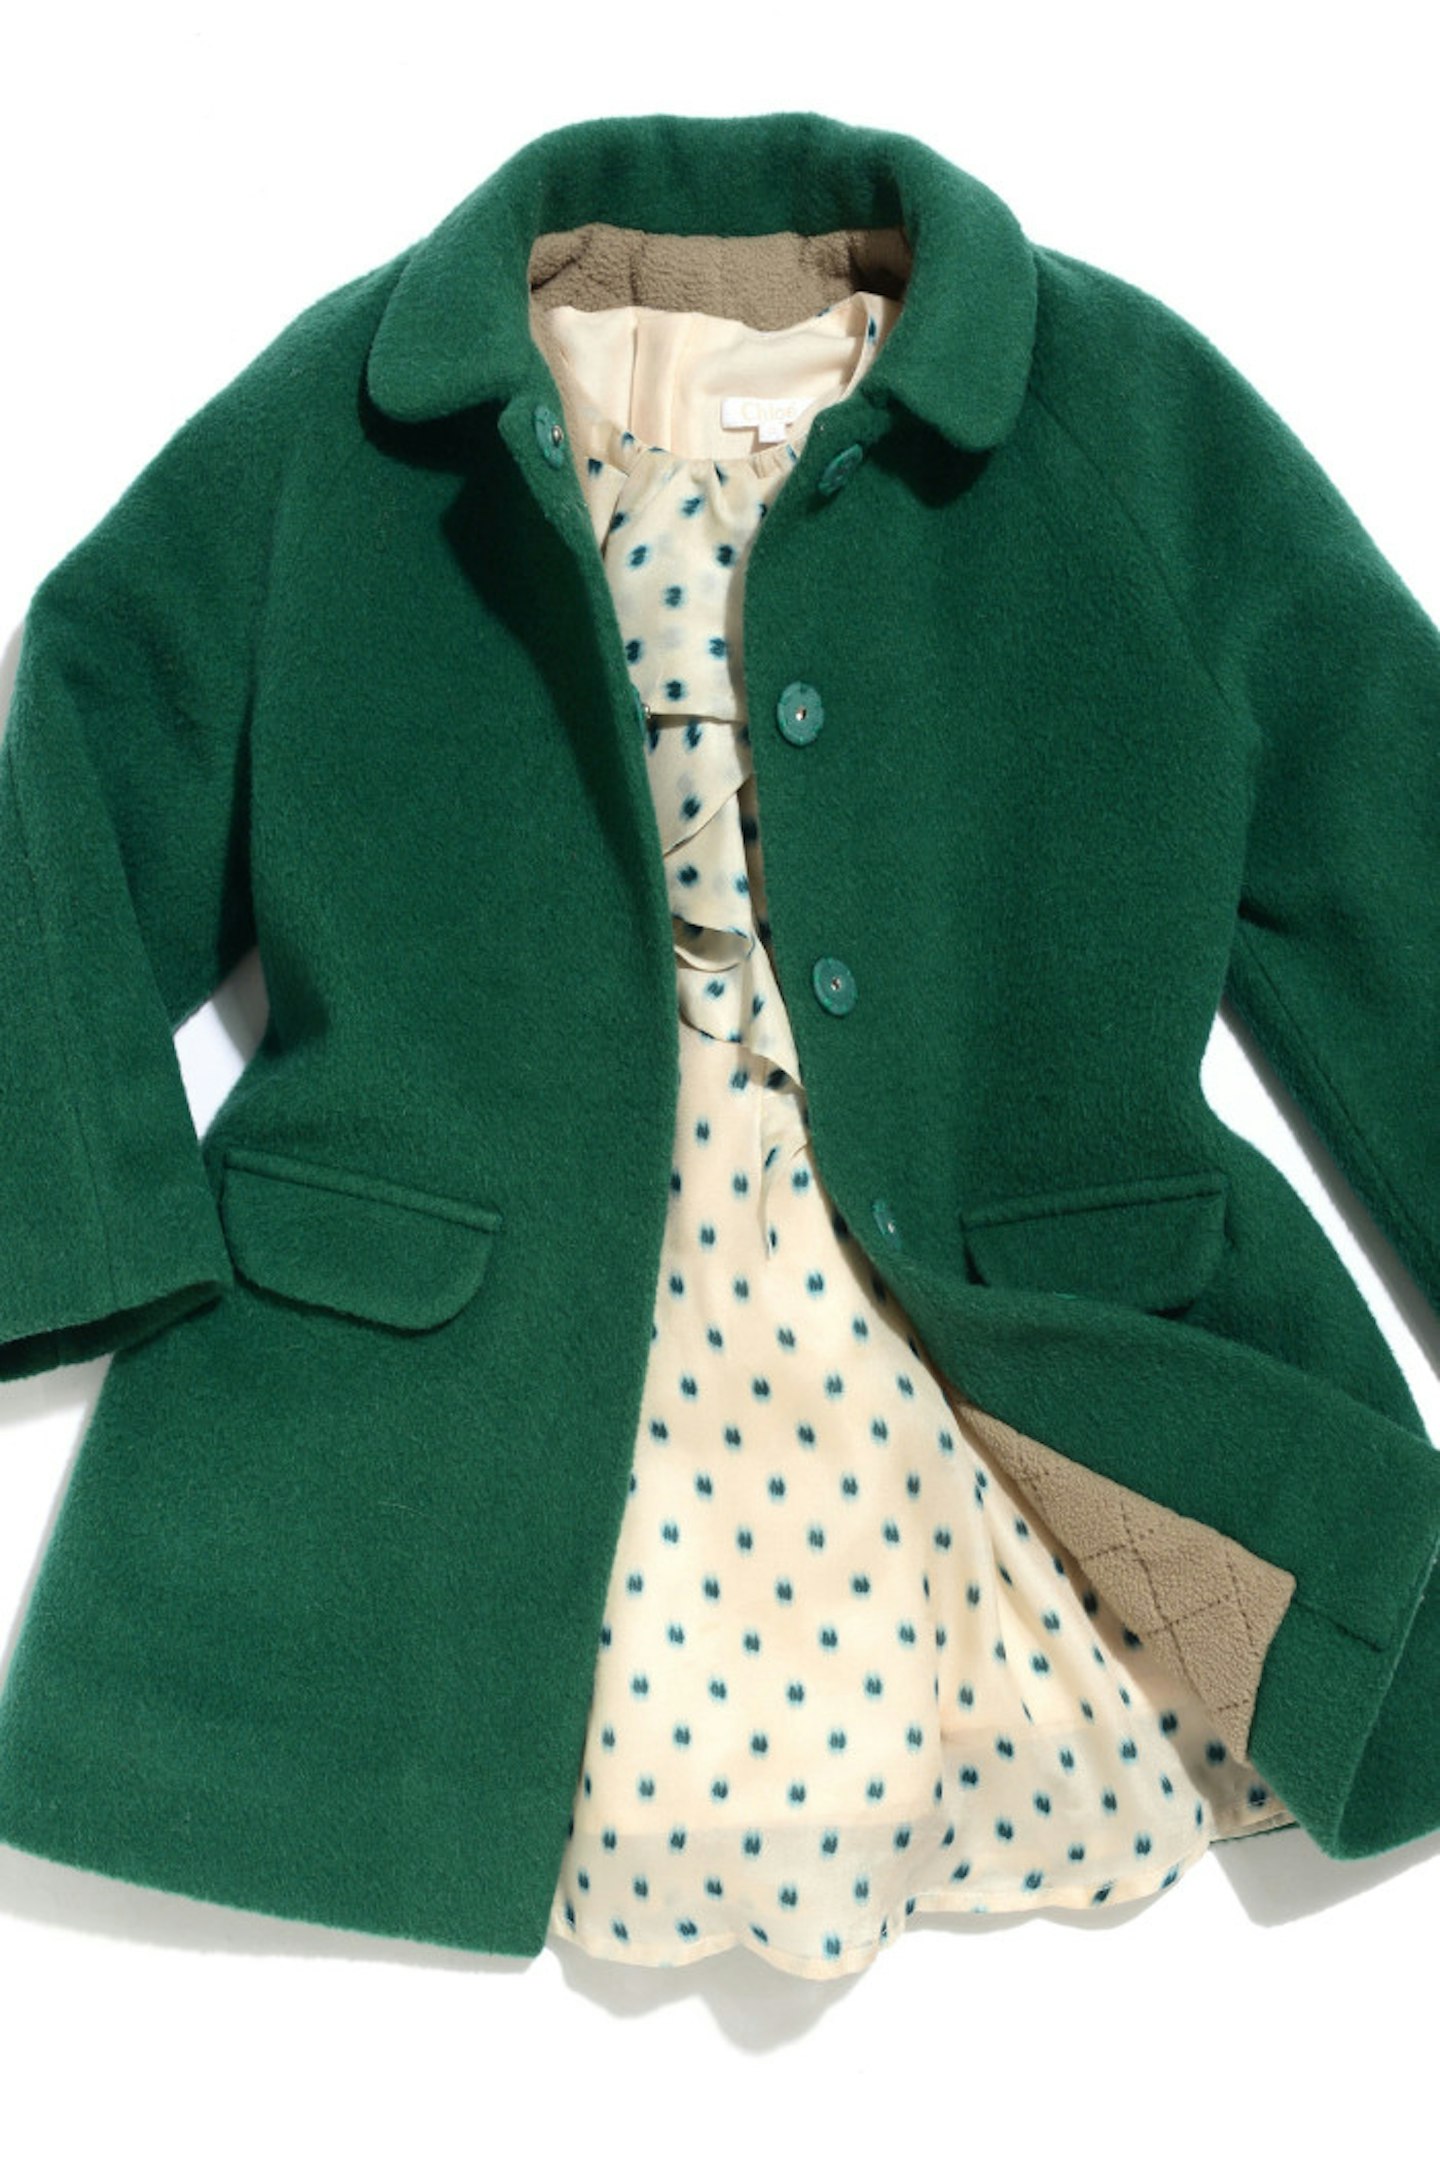 Green Caramel Bay&Child peacoat with a matching Chloe cream/green/blue pattern dress